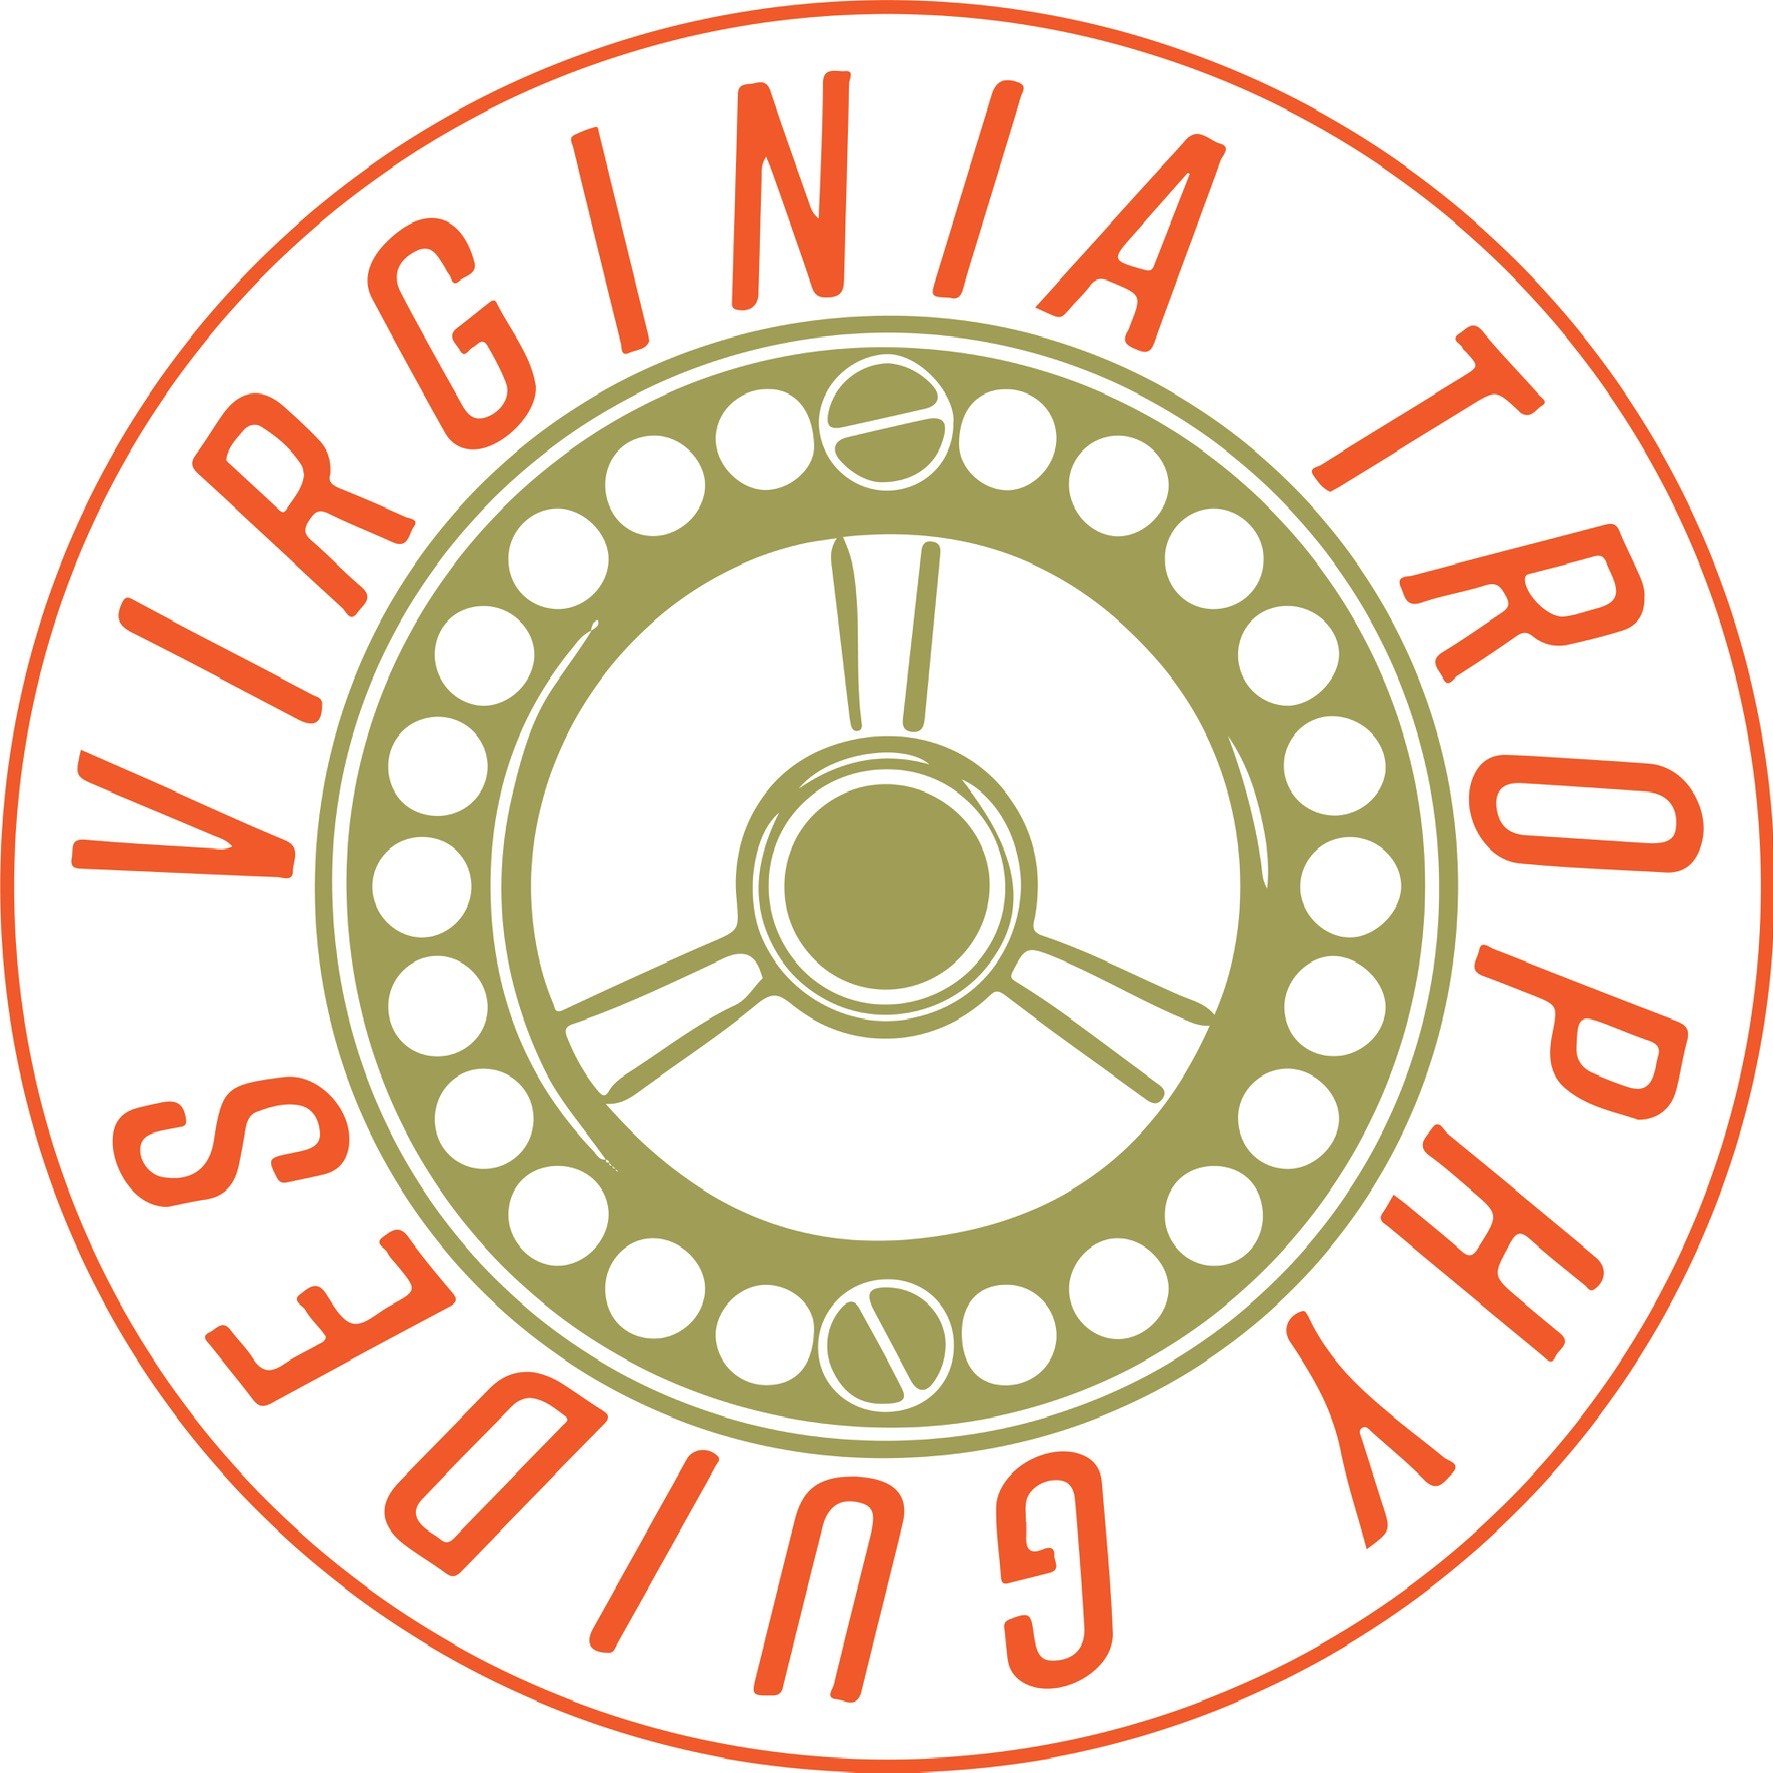 VTG Reel Logo - Stickers-06.jpeg